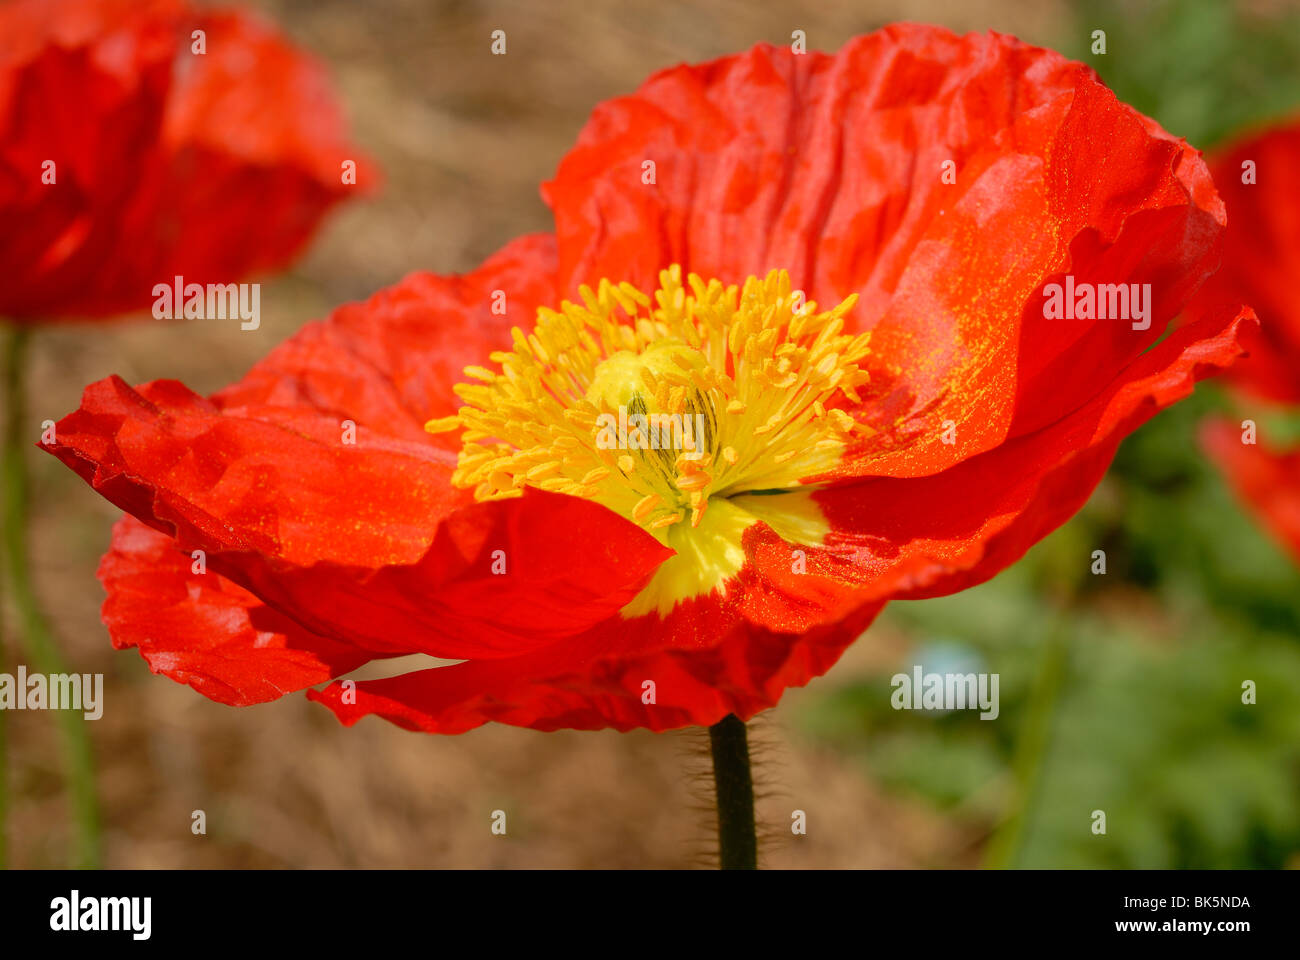 Poppy flower blooming in the Dallas Arboretum Park, Texas Stock Photo